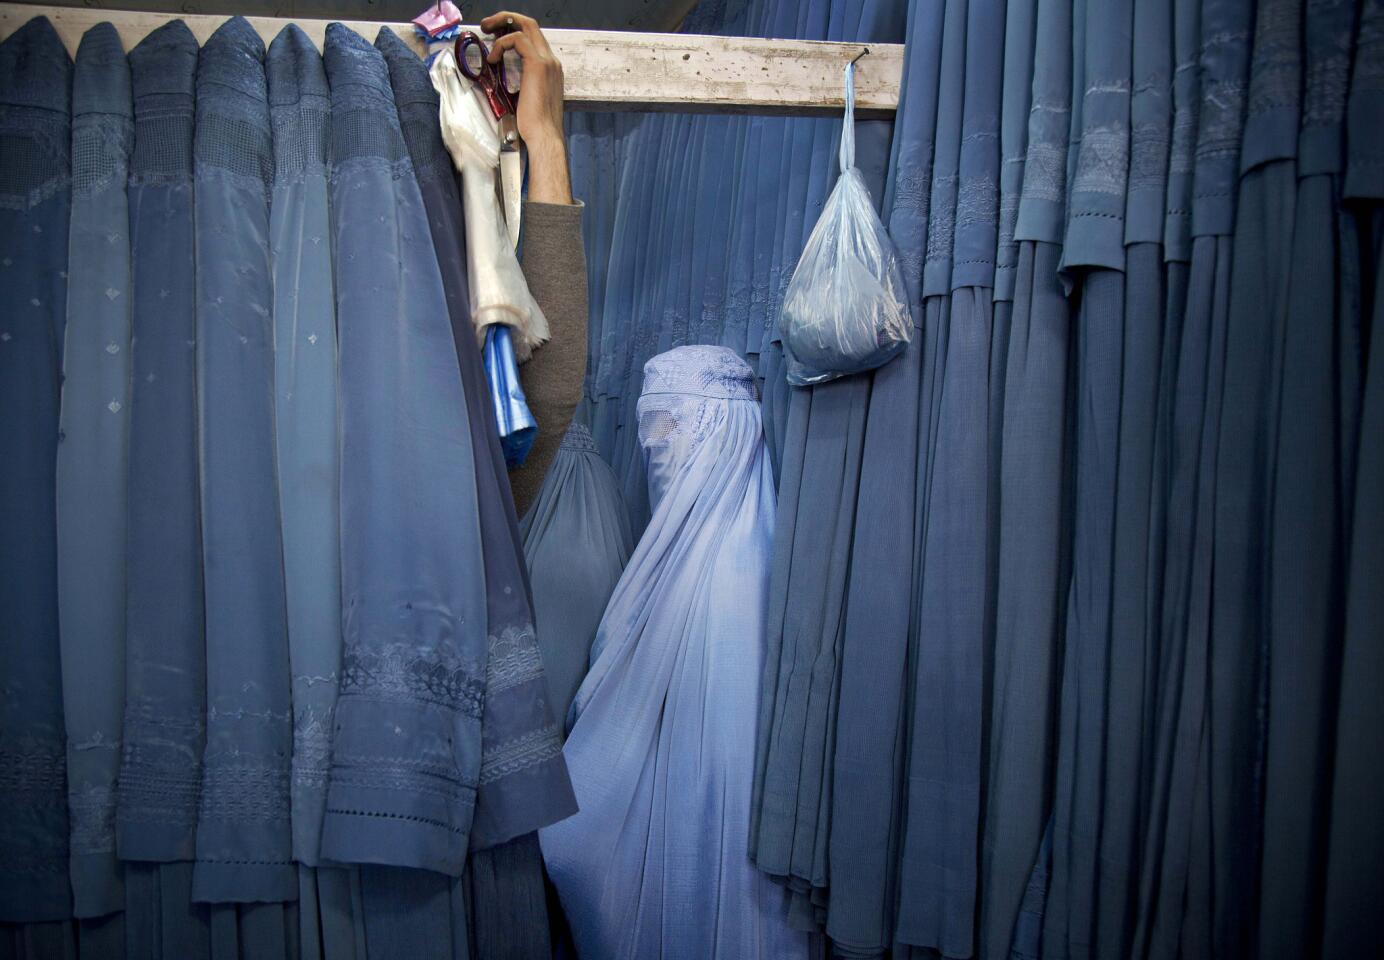 Burka changing room